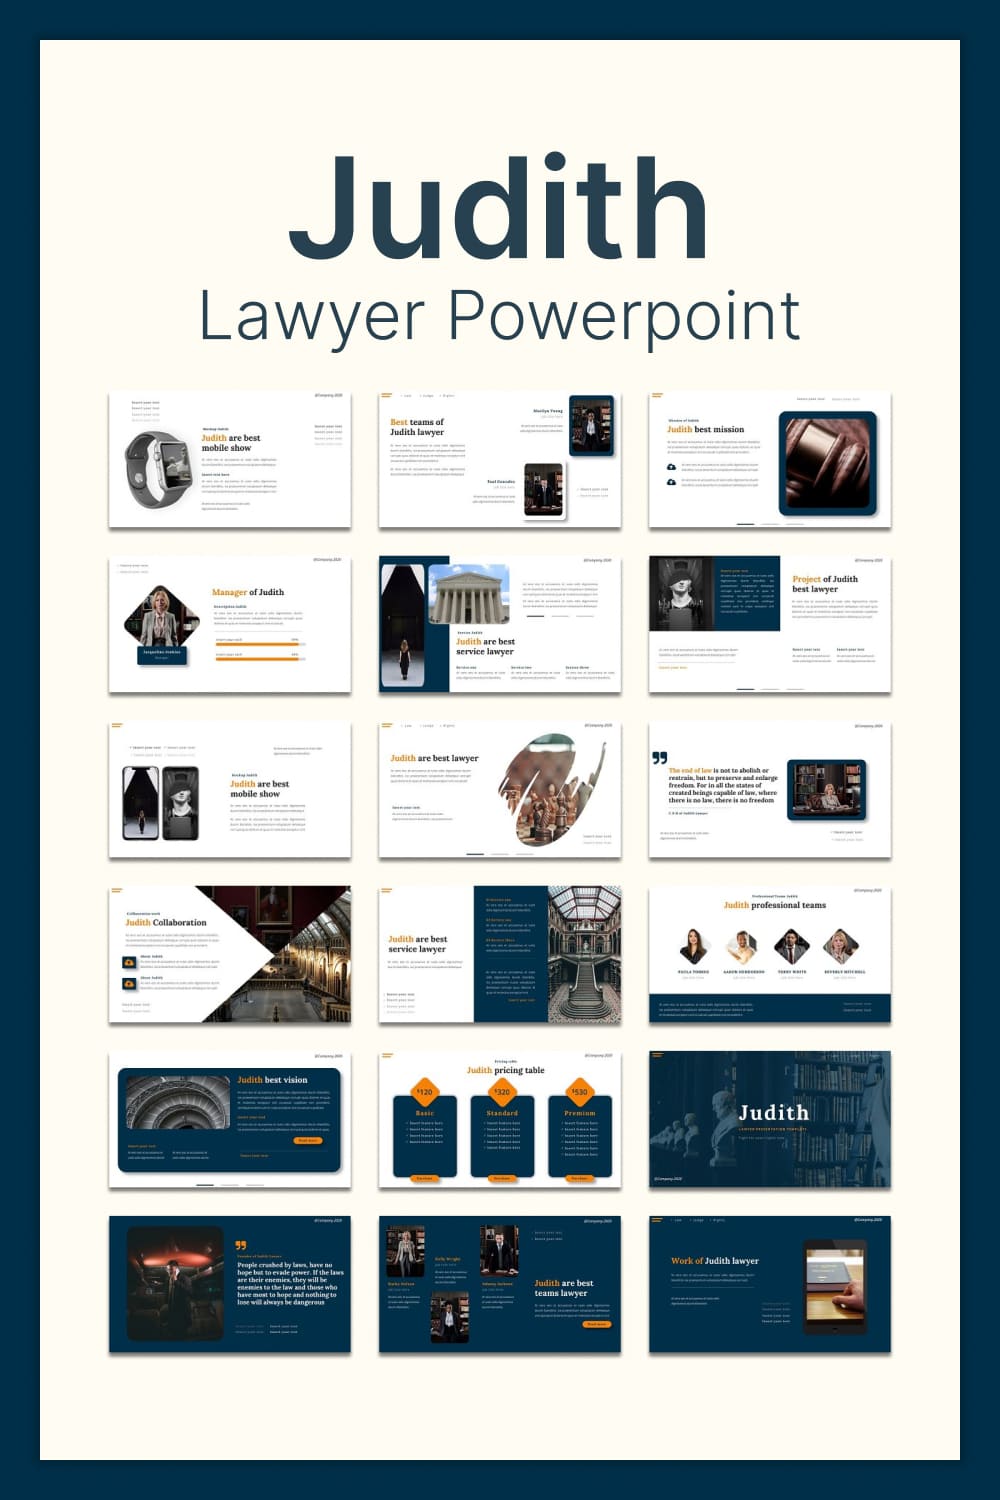 judith lawyer powerpoint 03